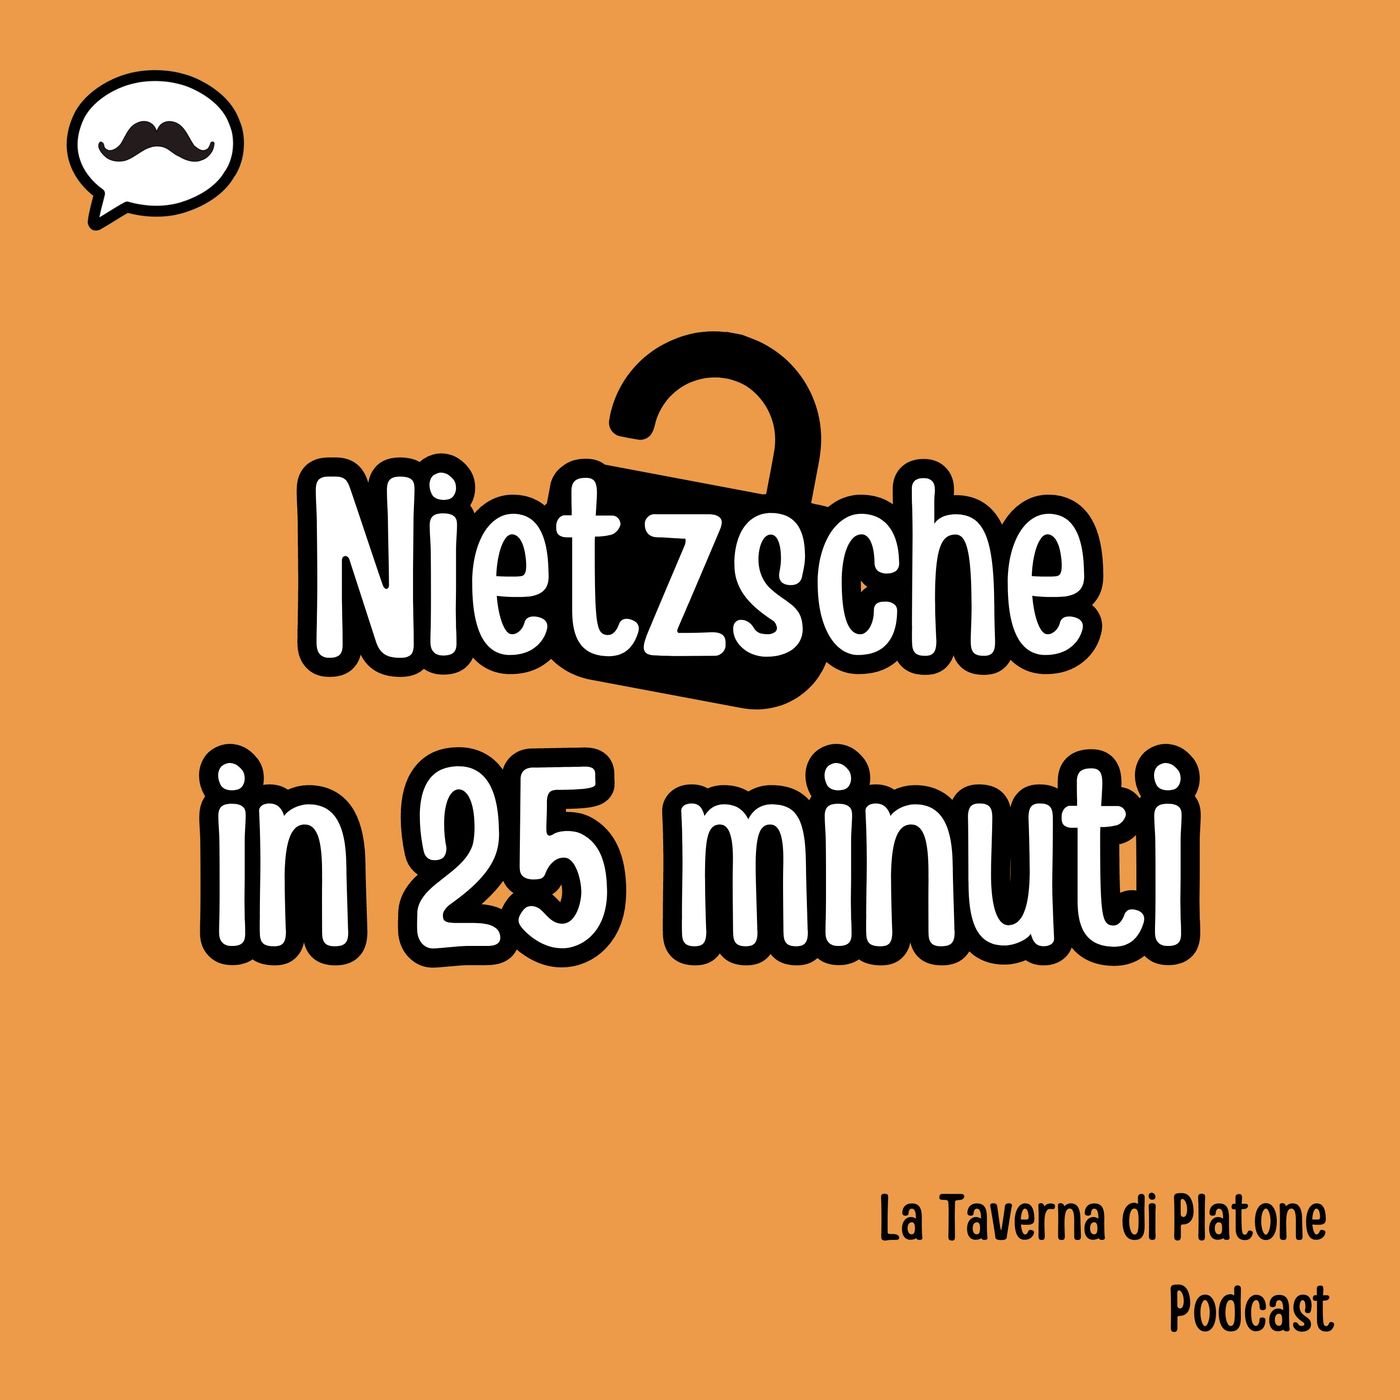 Nietzsche in 25 minuti